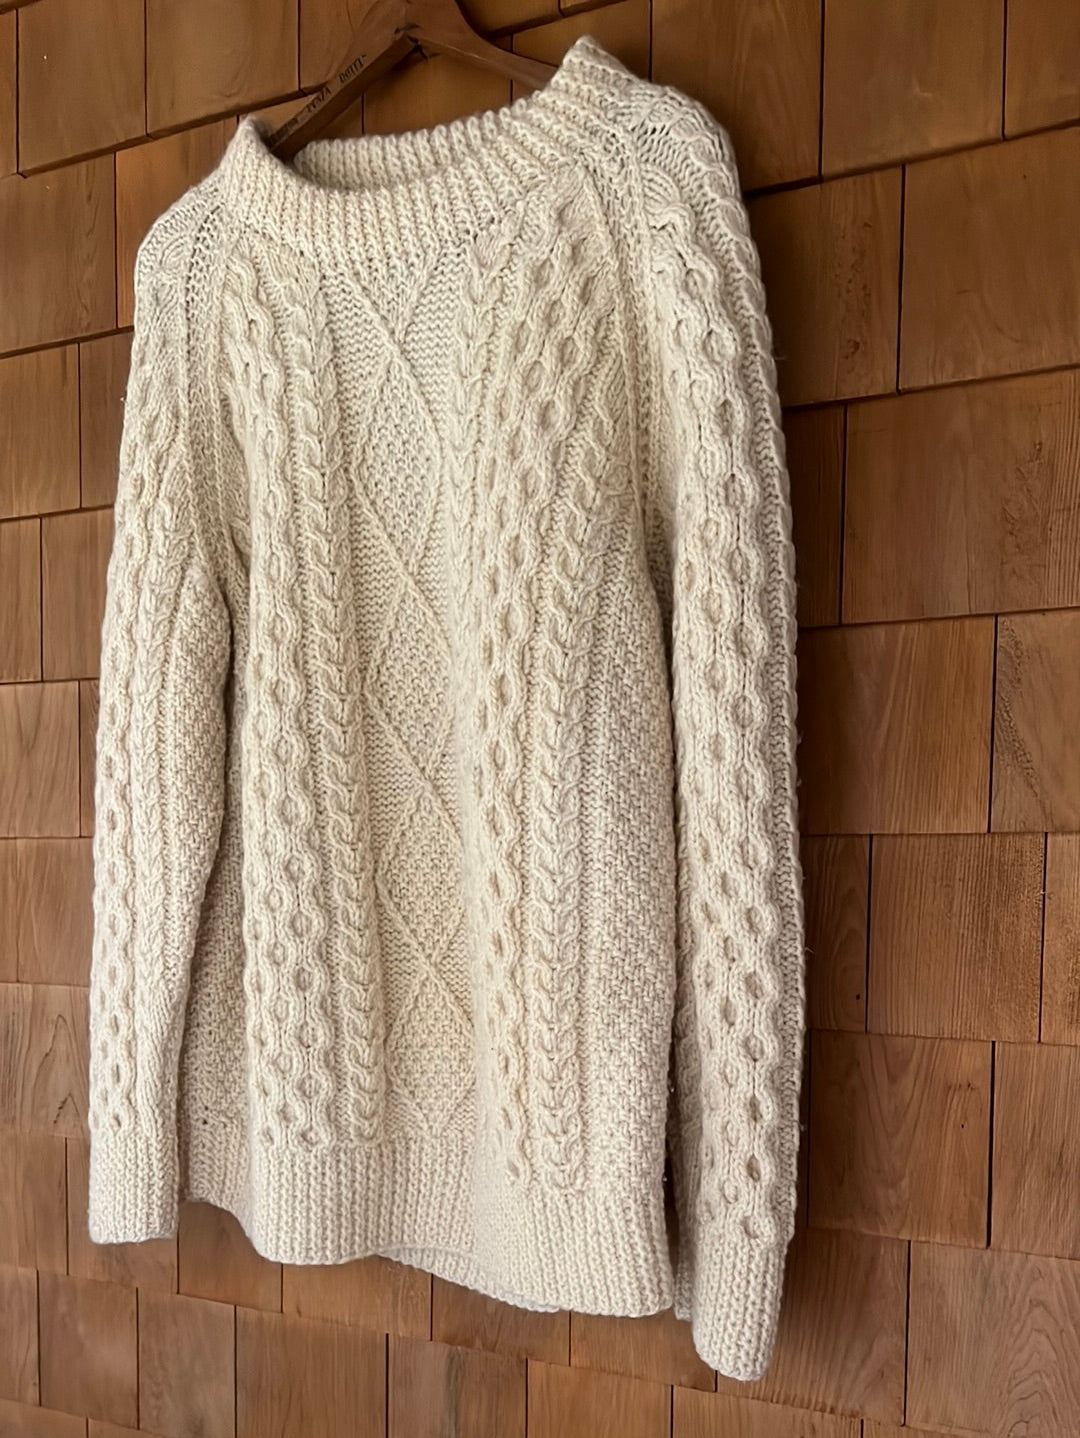 Vintage Wool Fishermen's Cardigan Sweater